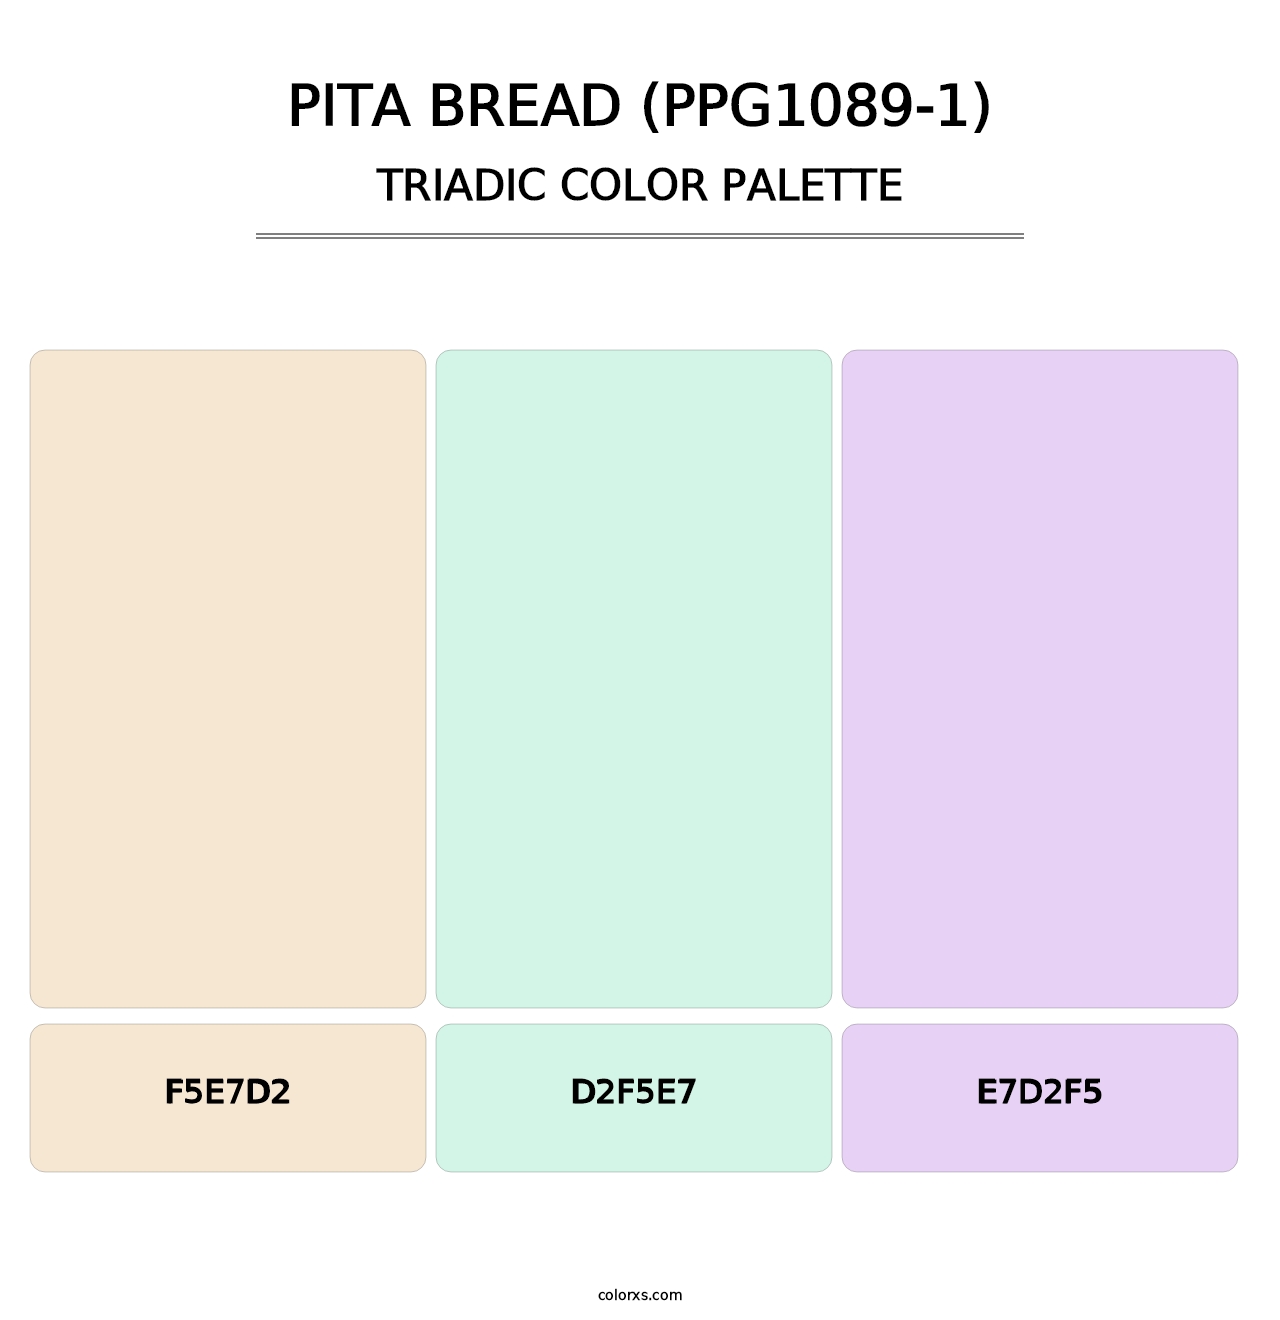 Pita Bread (PPG1089-1) - Triadic Color Palette